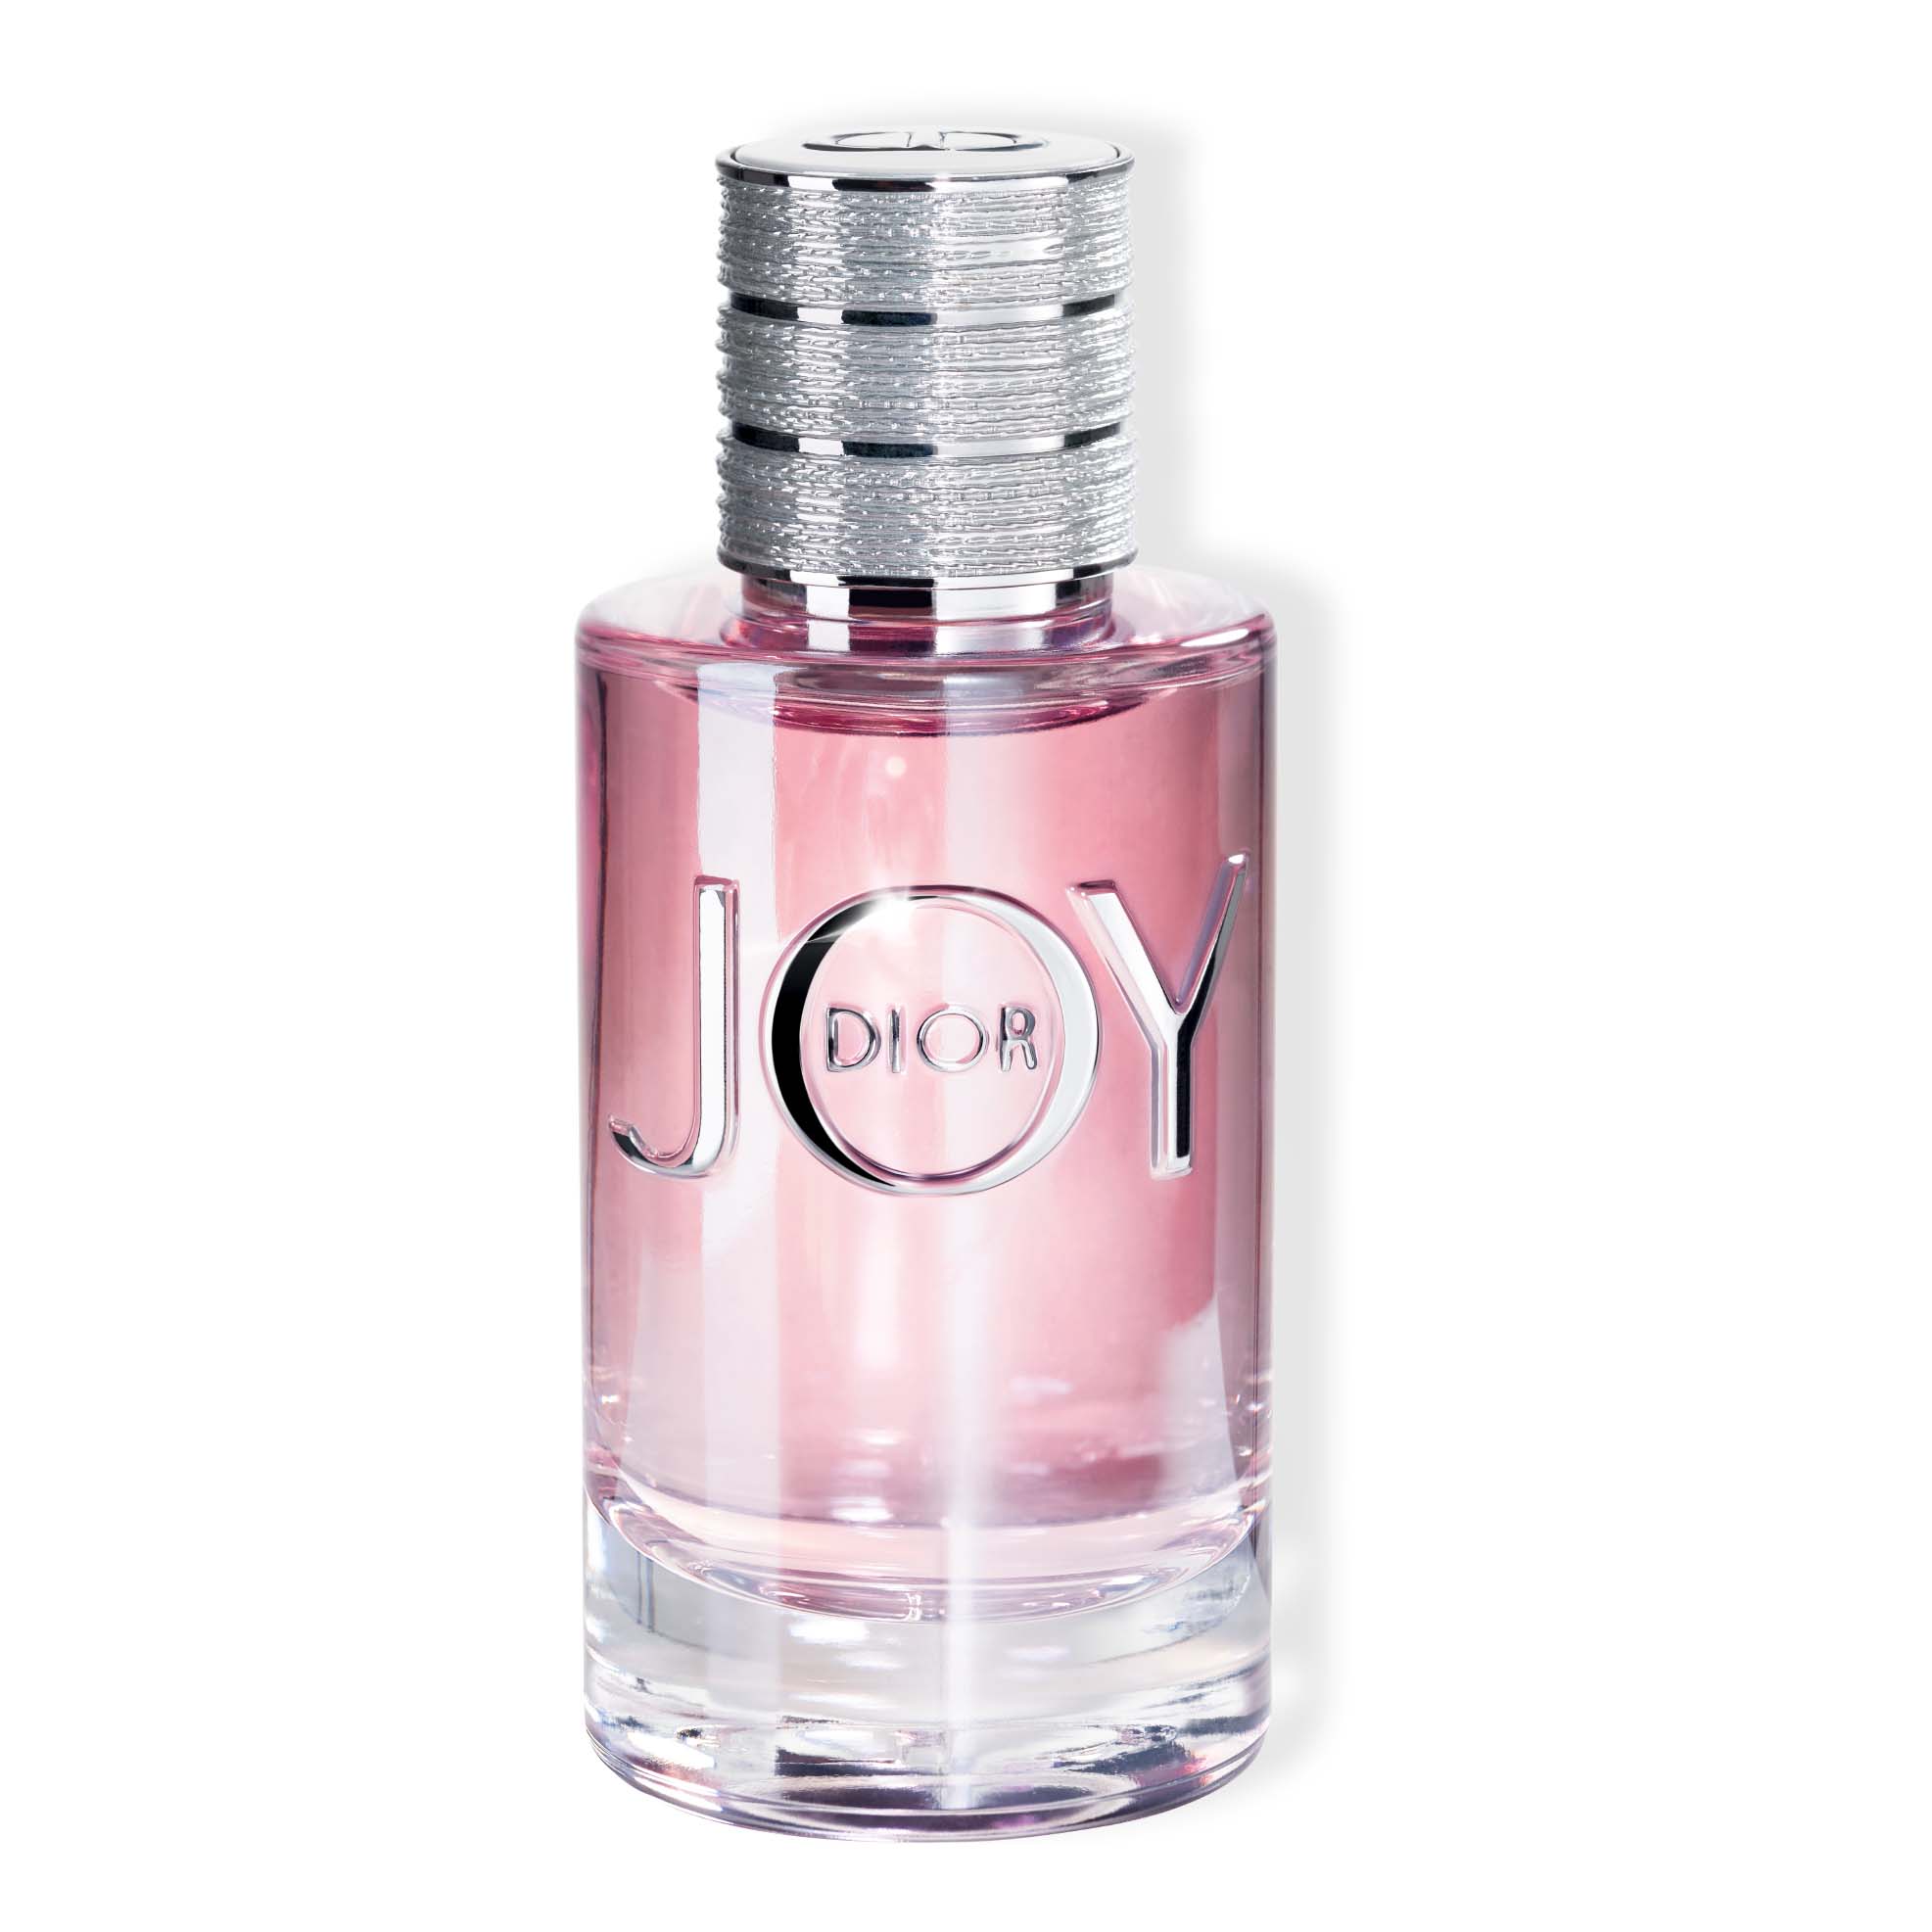 Joy Dior na sephora 138,50 agora 98,50